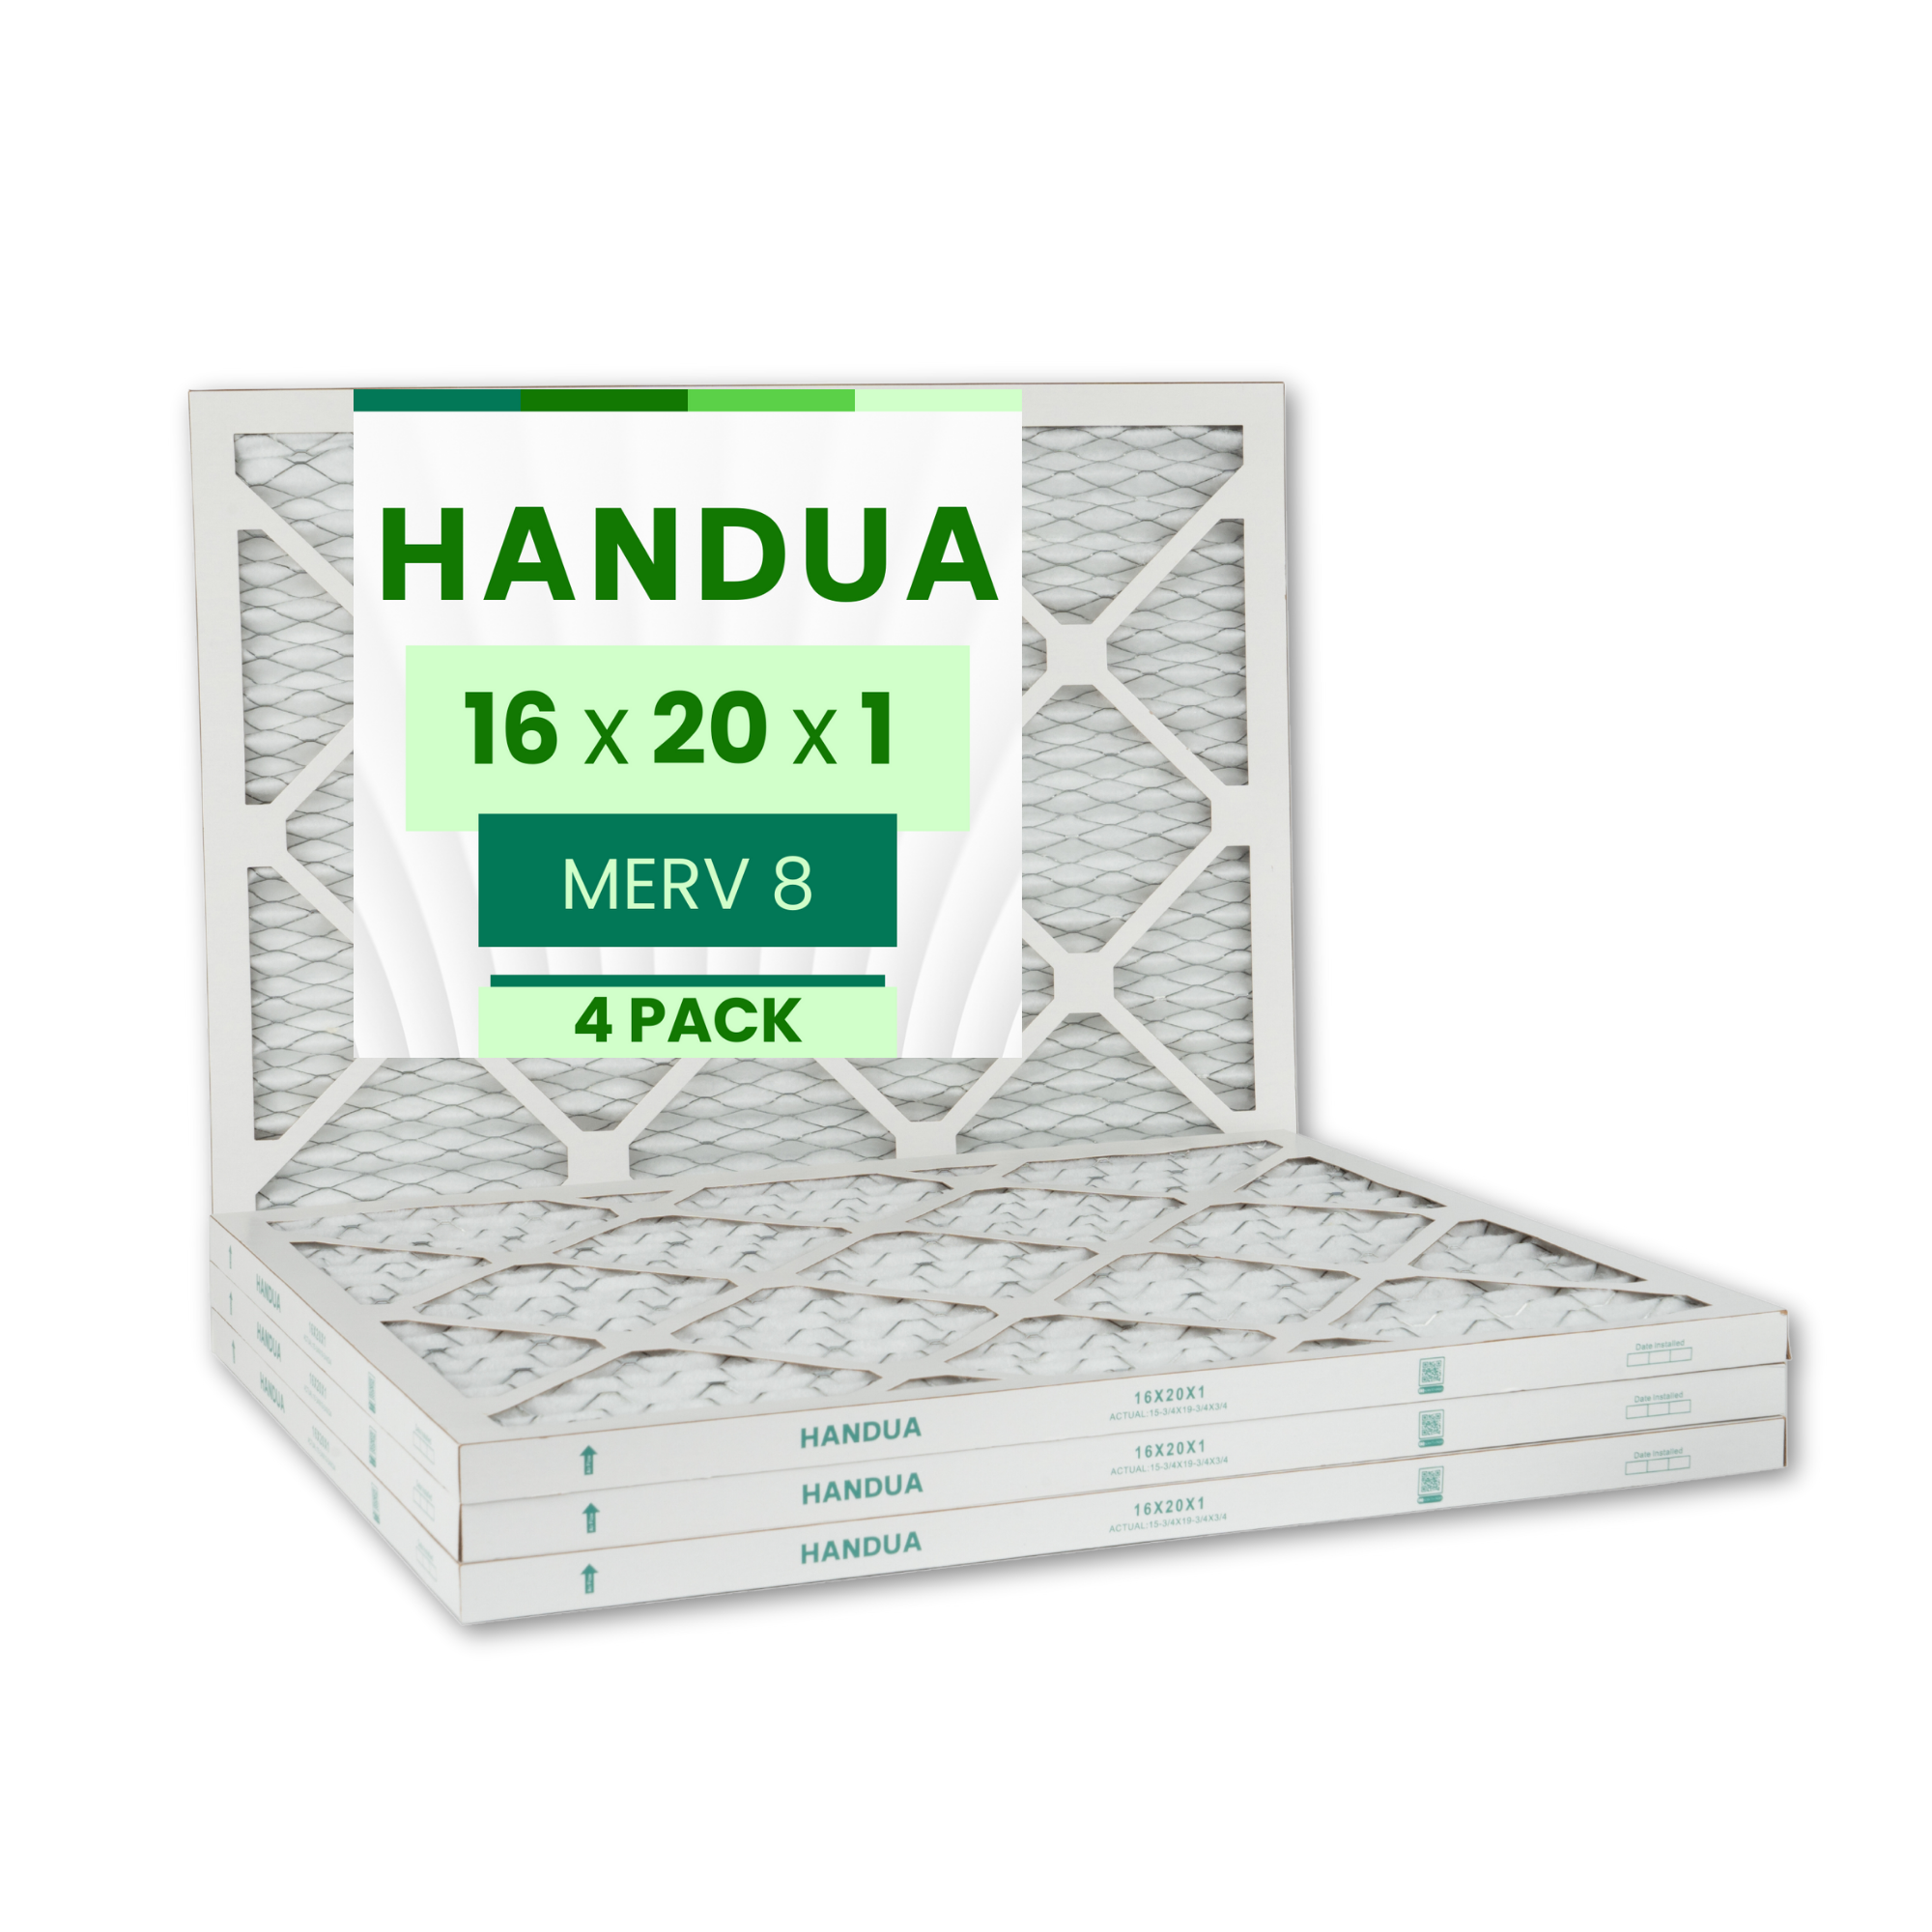 Handua 16x20x1 Air Filter MERV 8 Dust Control, Plated Furnace AC Air Replacement Filter, 4 Pack (Actual Size: 15.75" x 19.75" x 0.75")